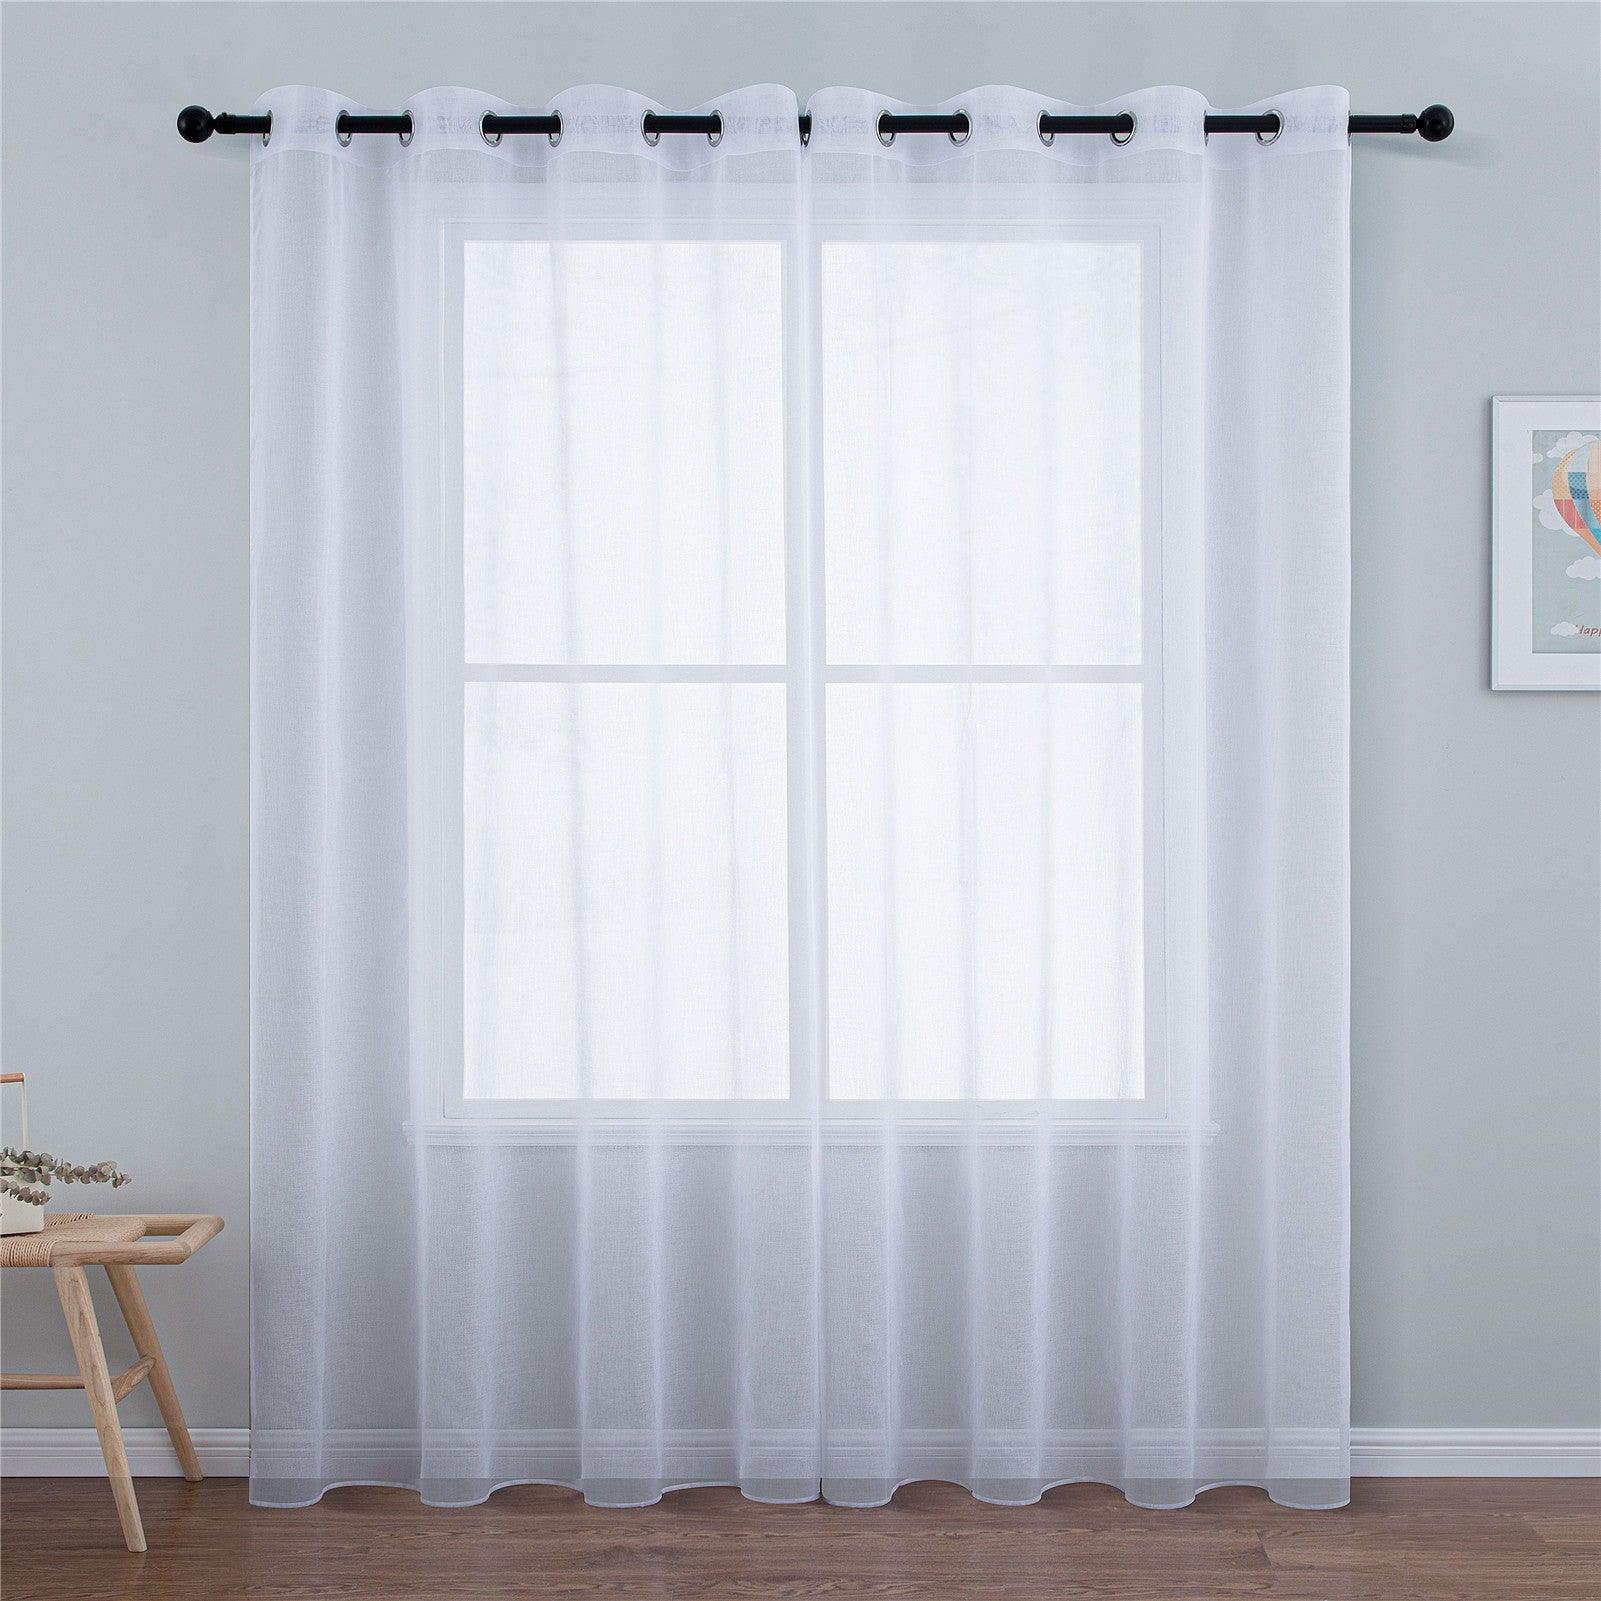 Topfinel Semi Sheer Curtains For Bedroom Living Room,Grommet Faux Linen Window Curtains - Topfinel